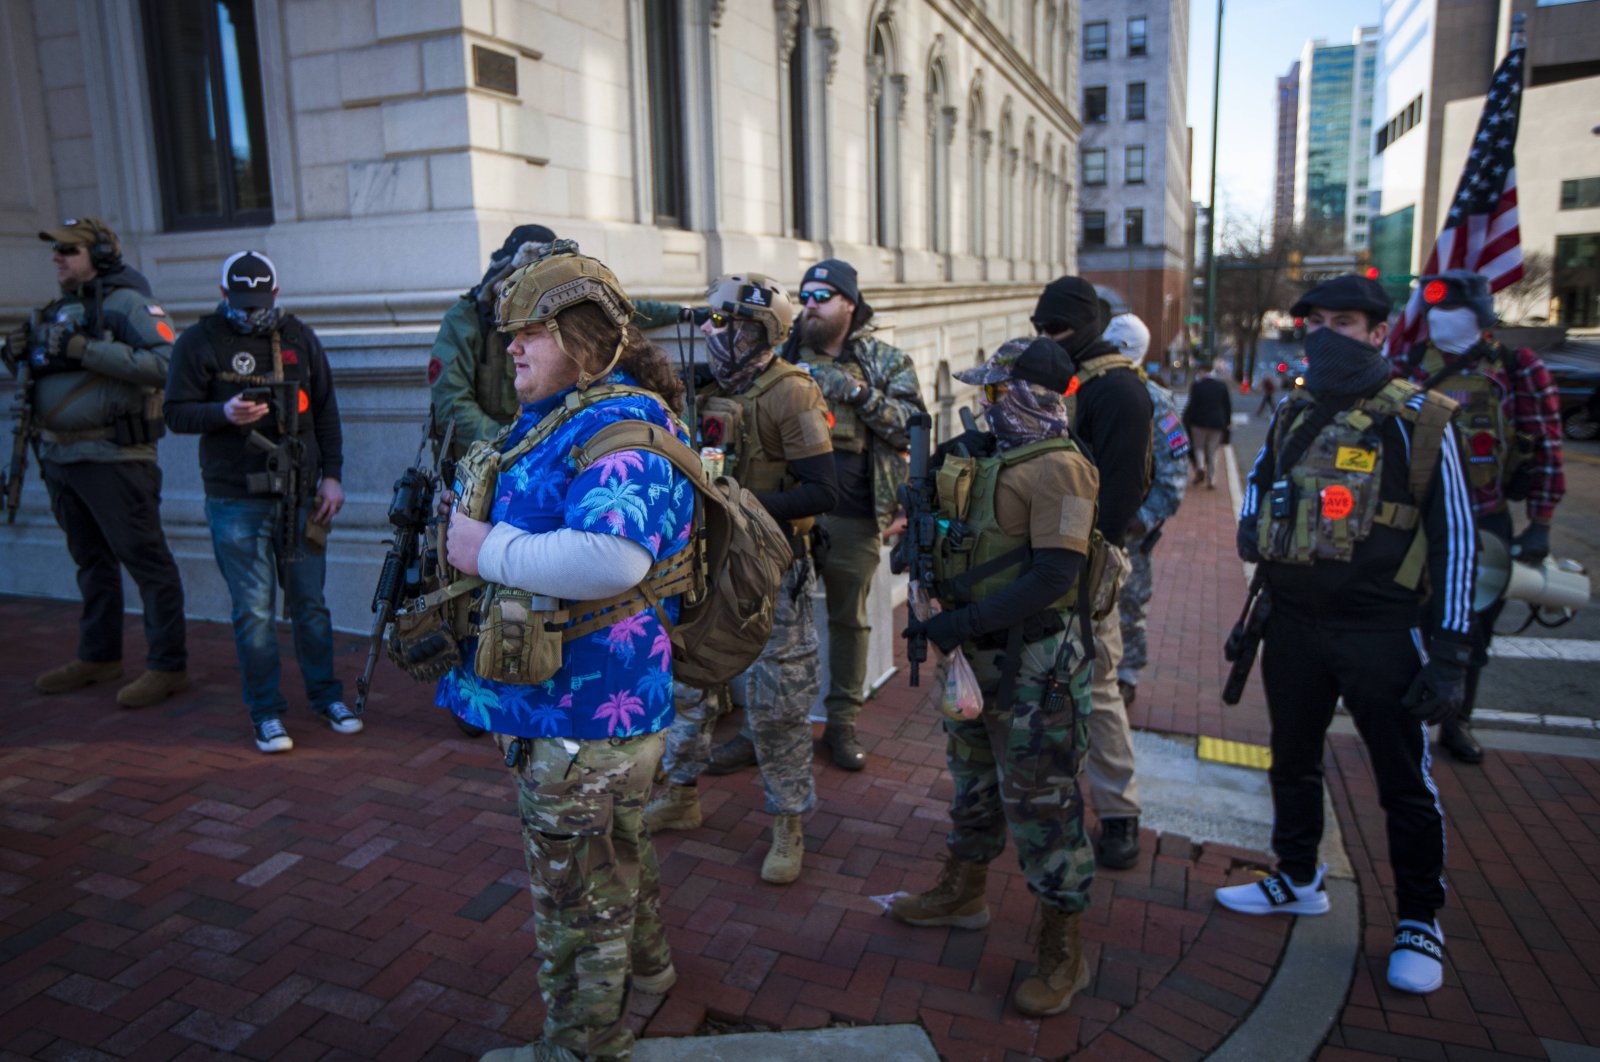 Members of a pro-gun group are seen in Richmond, Virginia, U.S., Jan. 16, 2023. (AP Photo)